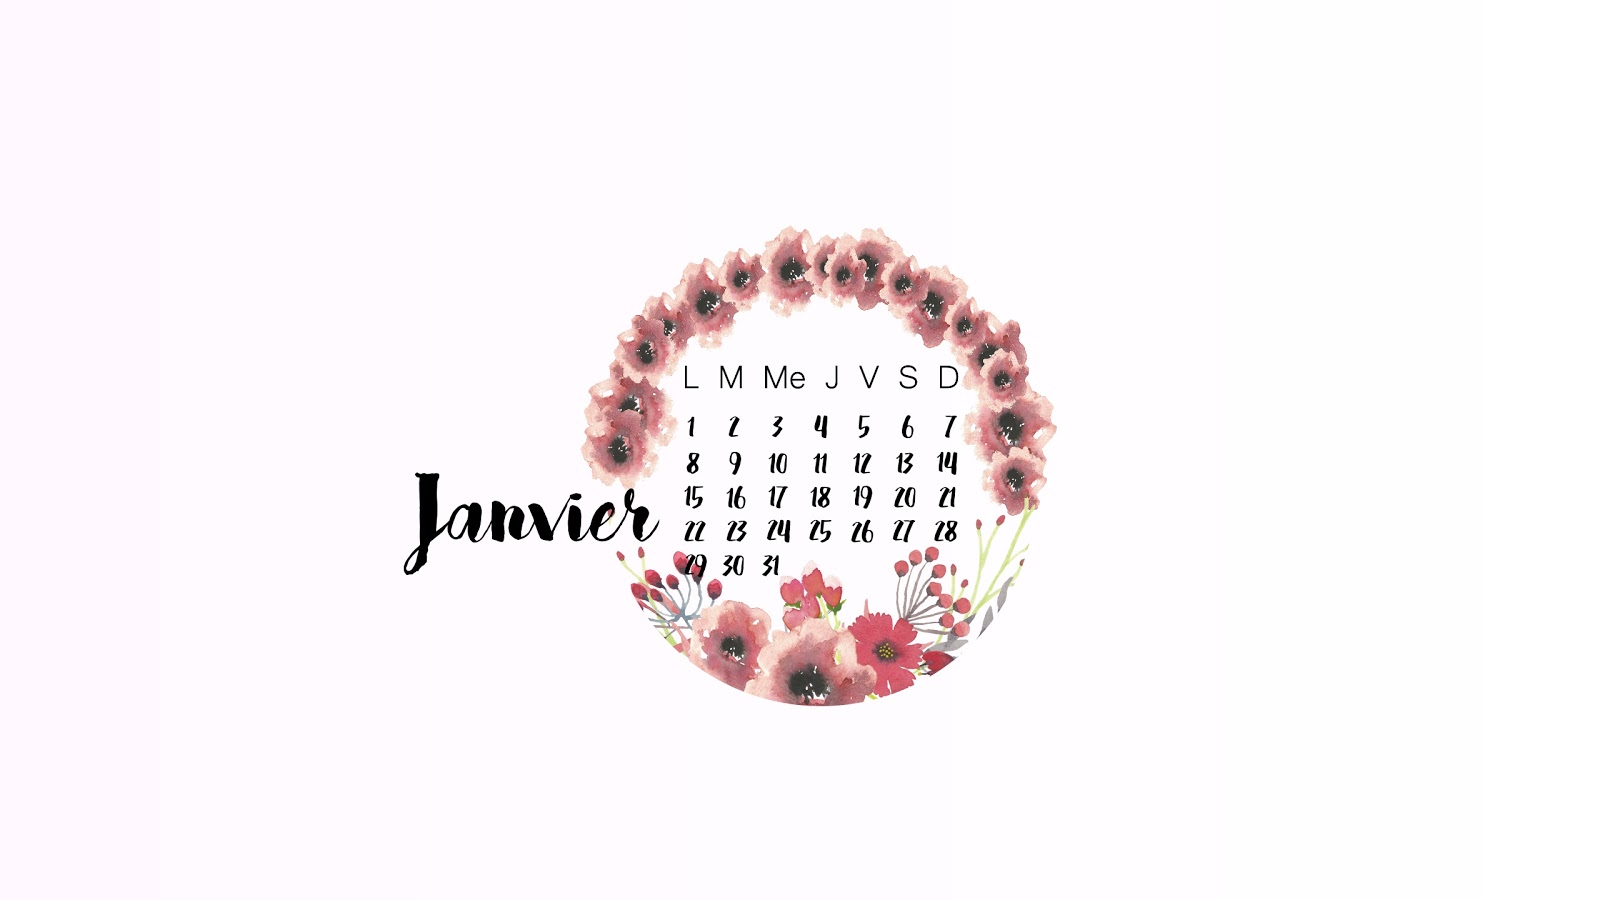 pauline-dress-fond-ecran-jpeg-rose-pastel-aquarelle-janvier-2018-wallpaper-telephone-iphone-january-calendrier-ordinateur